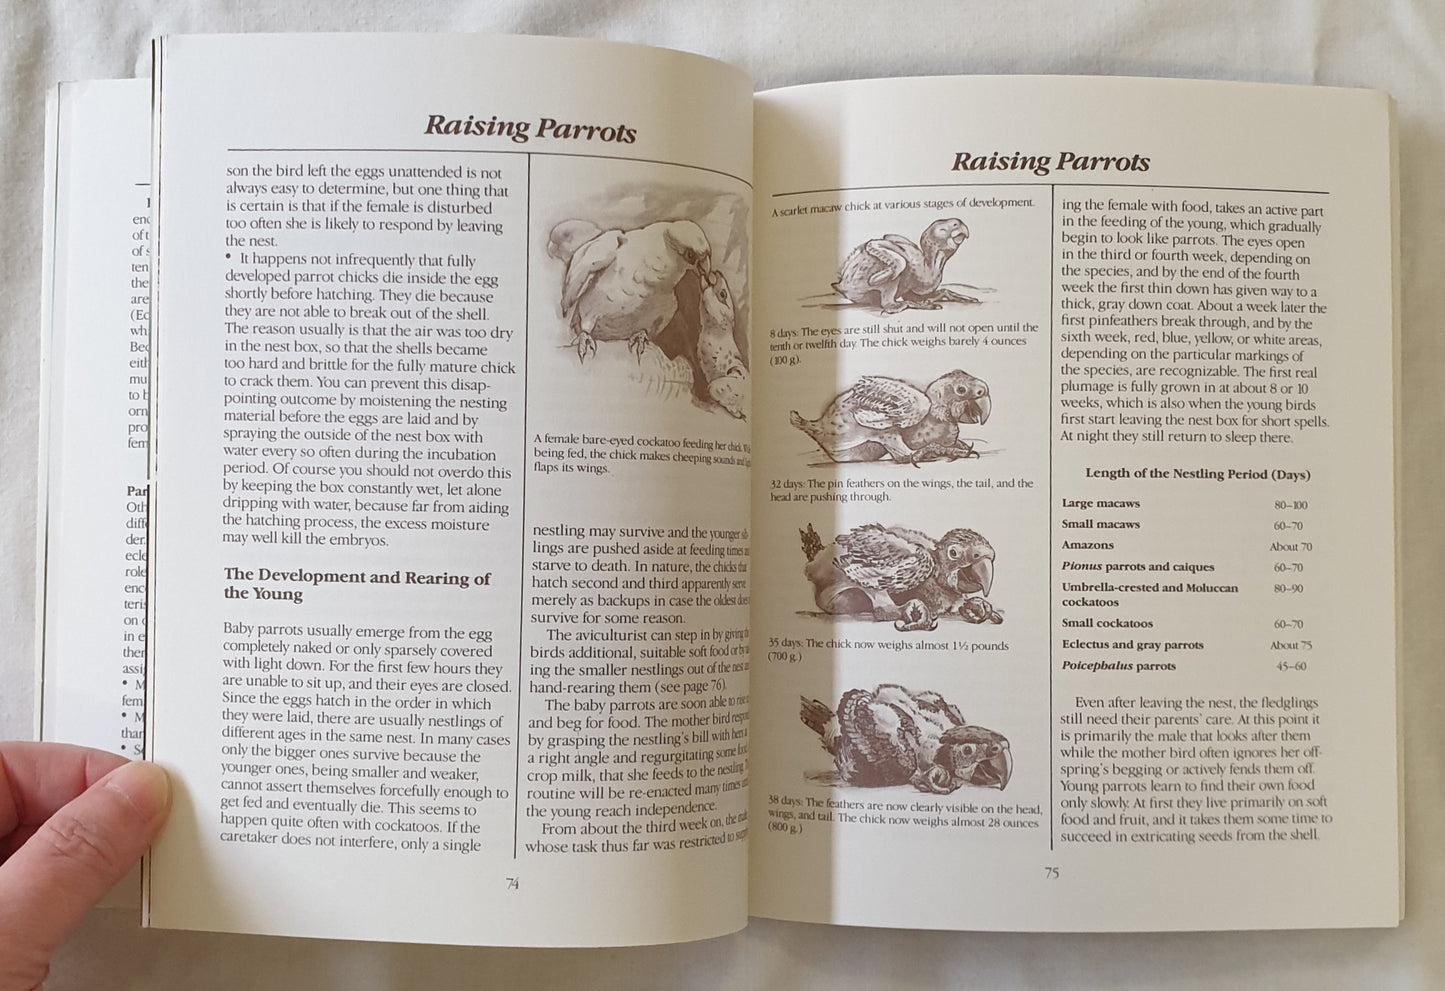 The New Parrot Handbook by Werner Lantermann